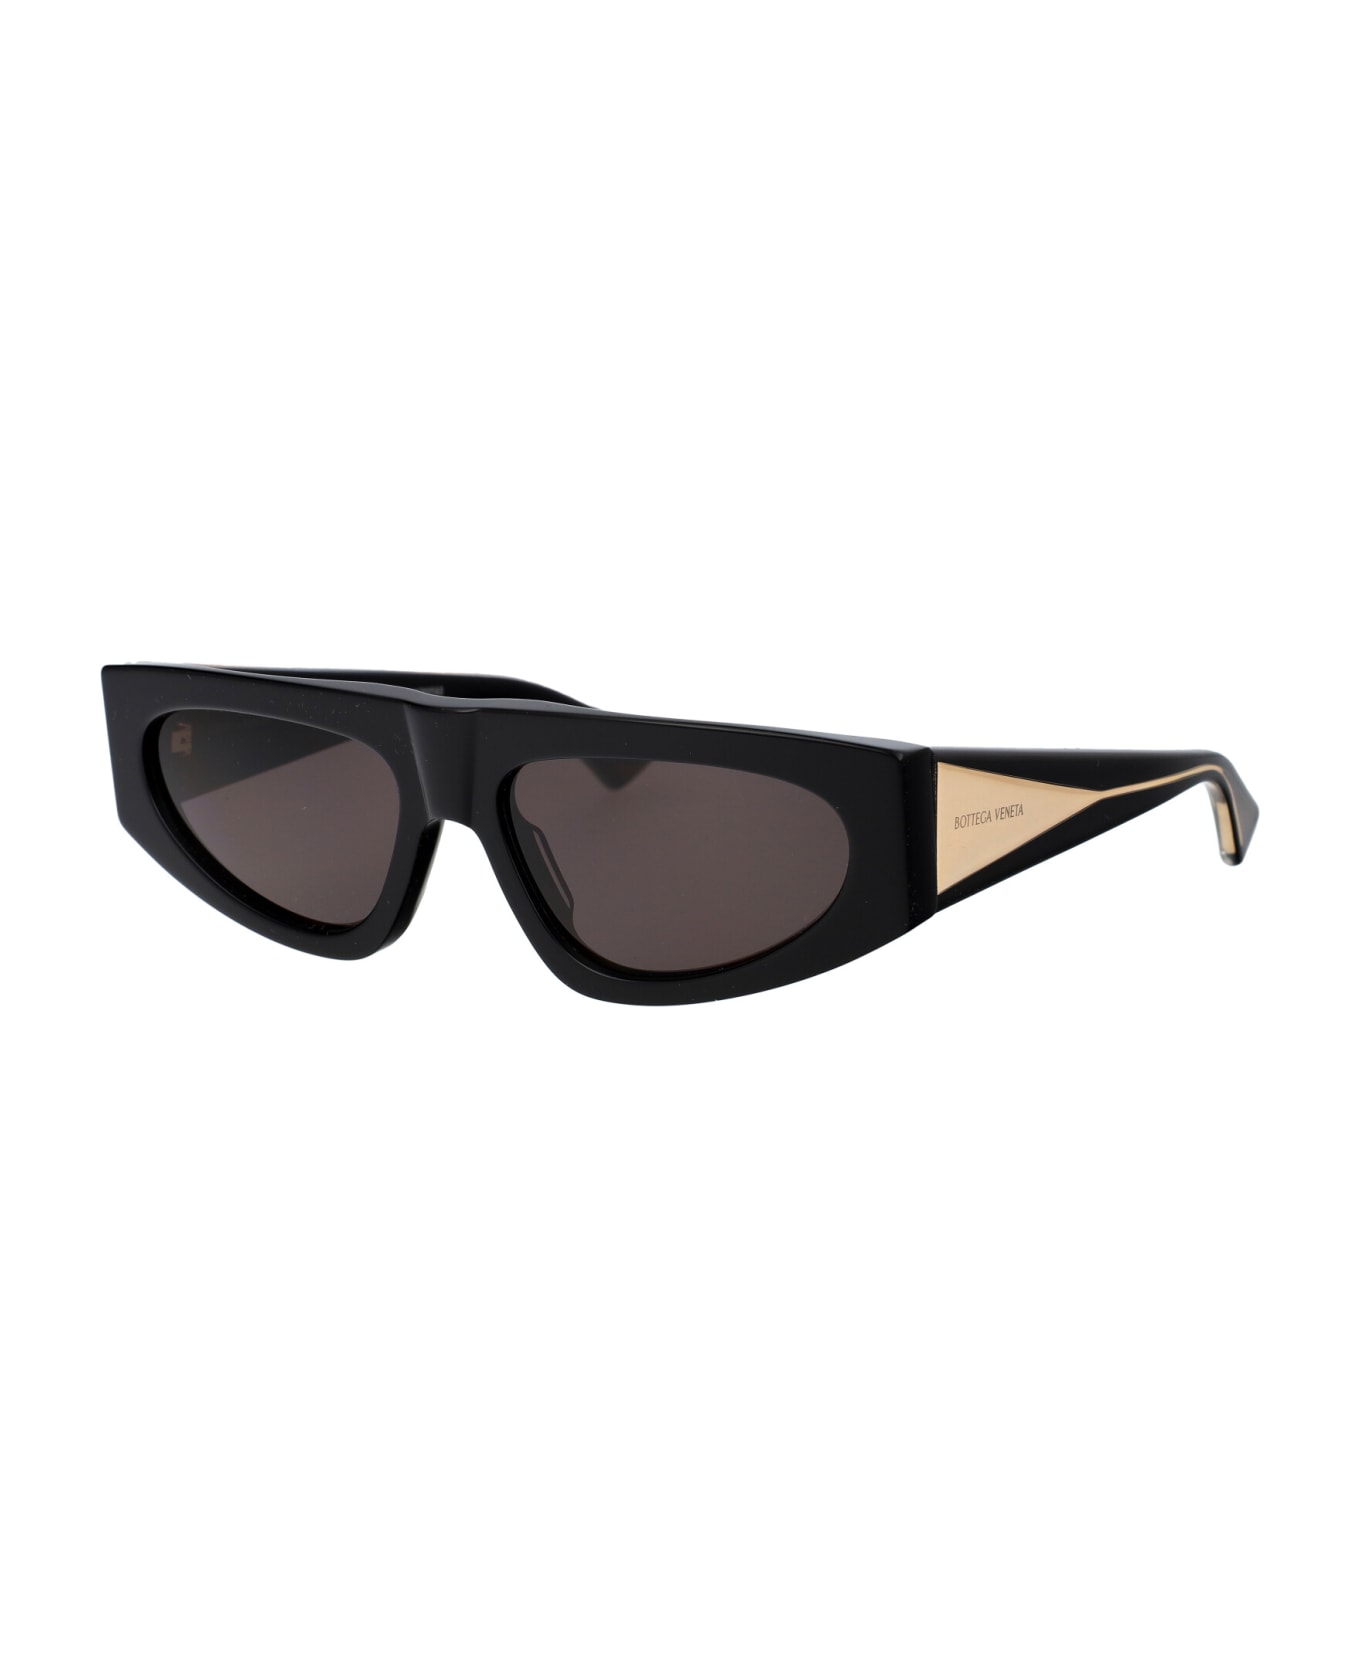 Bottega Veneta Eyewear Bv1277s Sunglasses - 001 BLACK CRYSTAL GREY